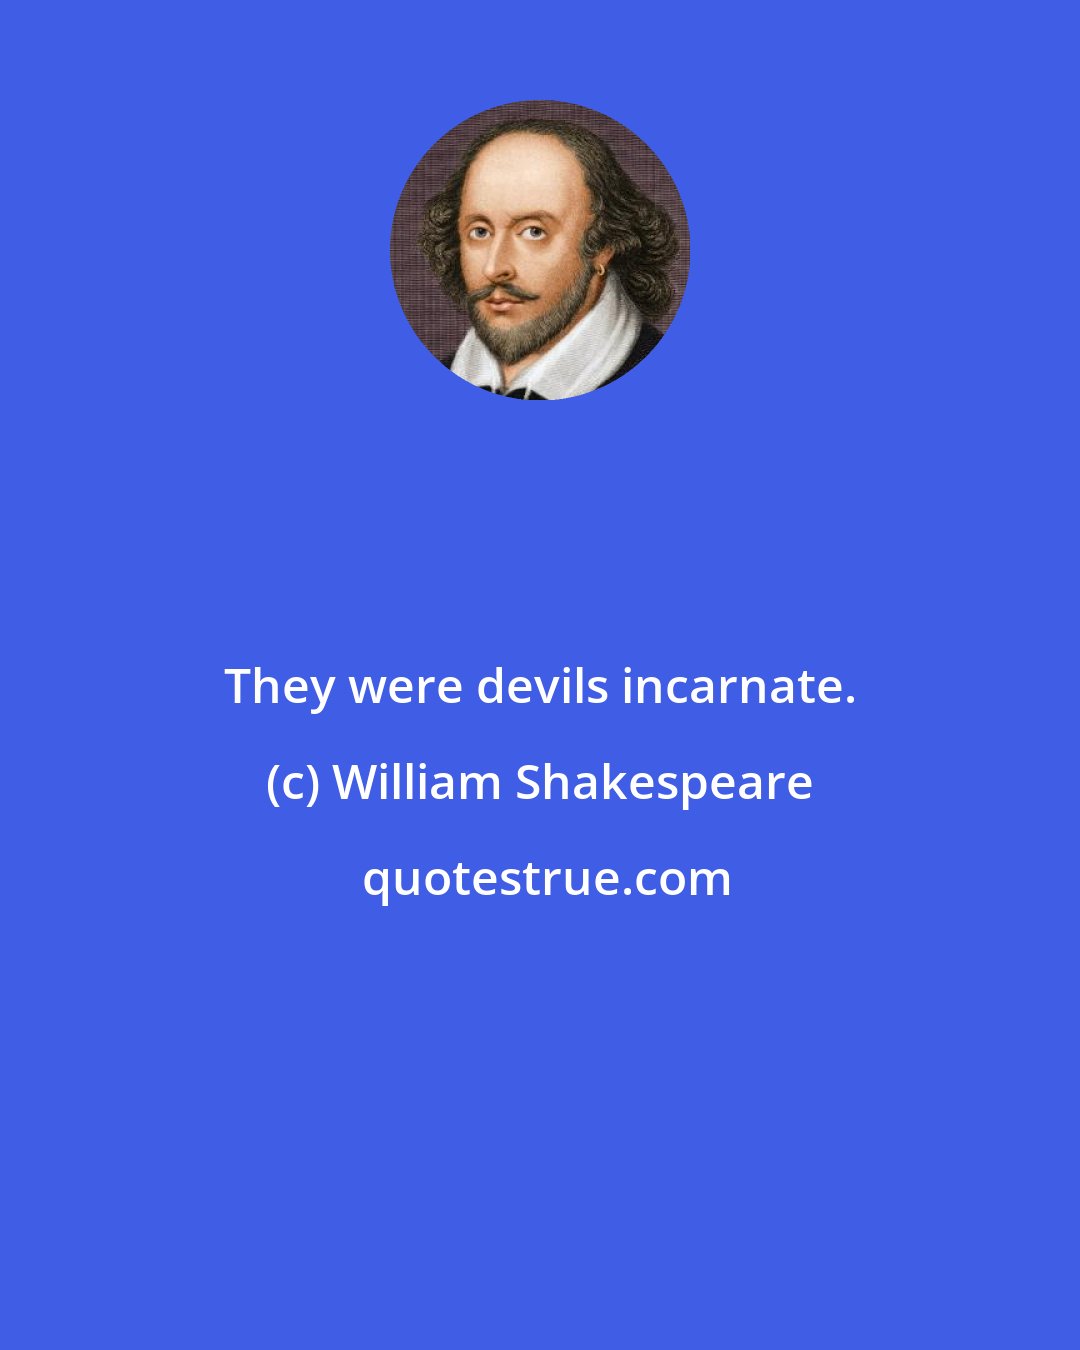 William Shakespeare: They were devils incarnate.